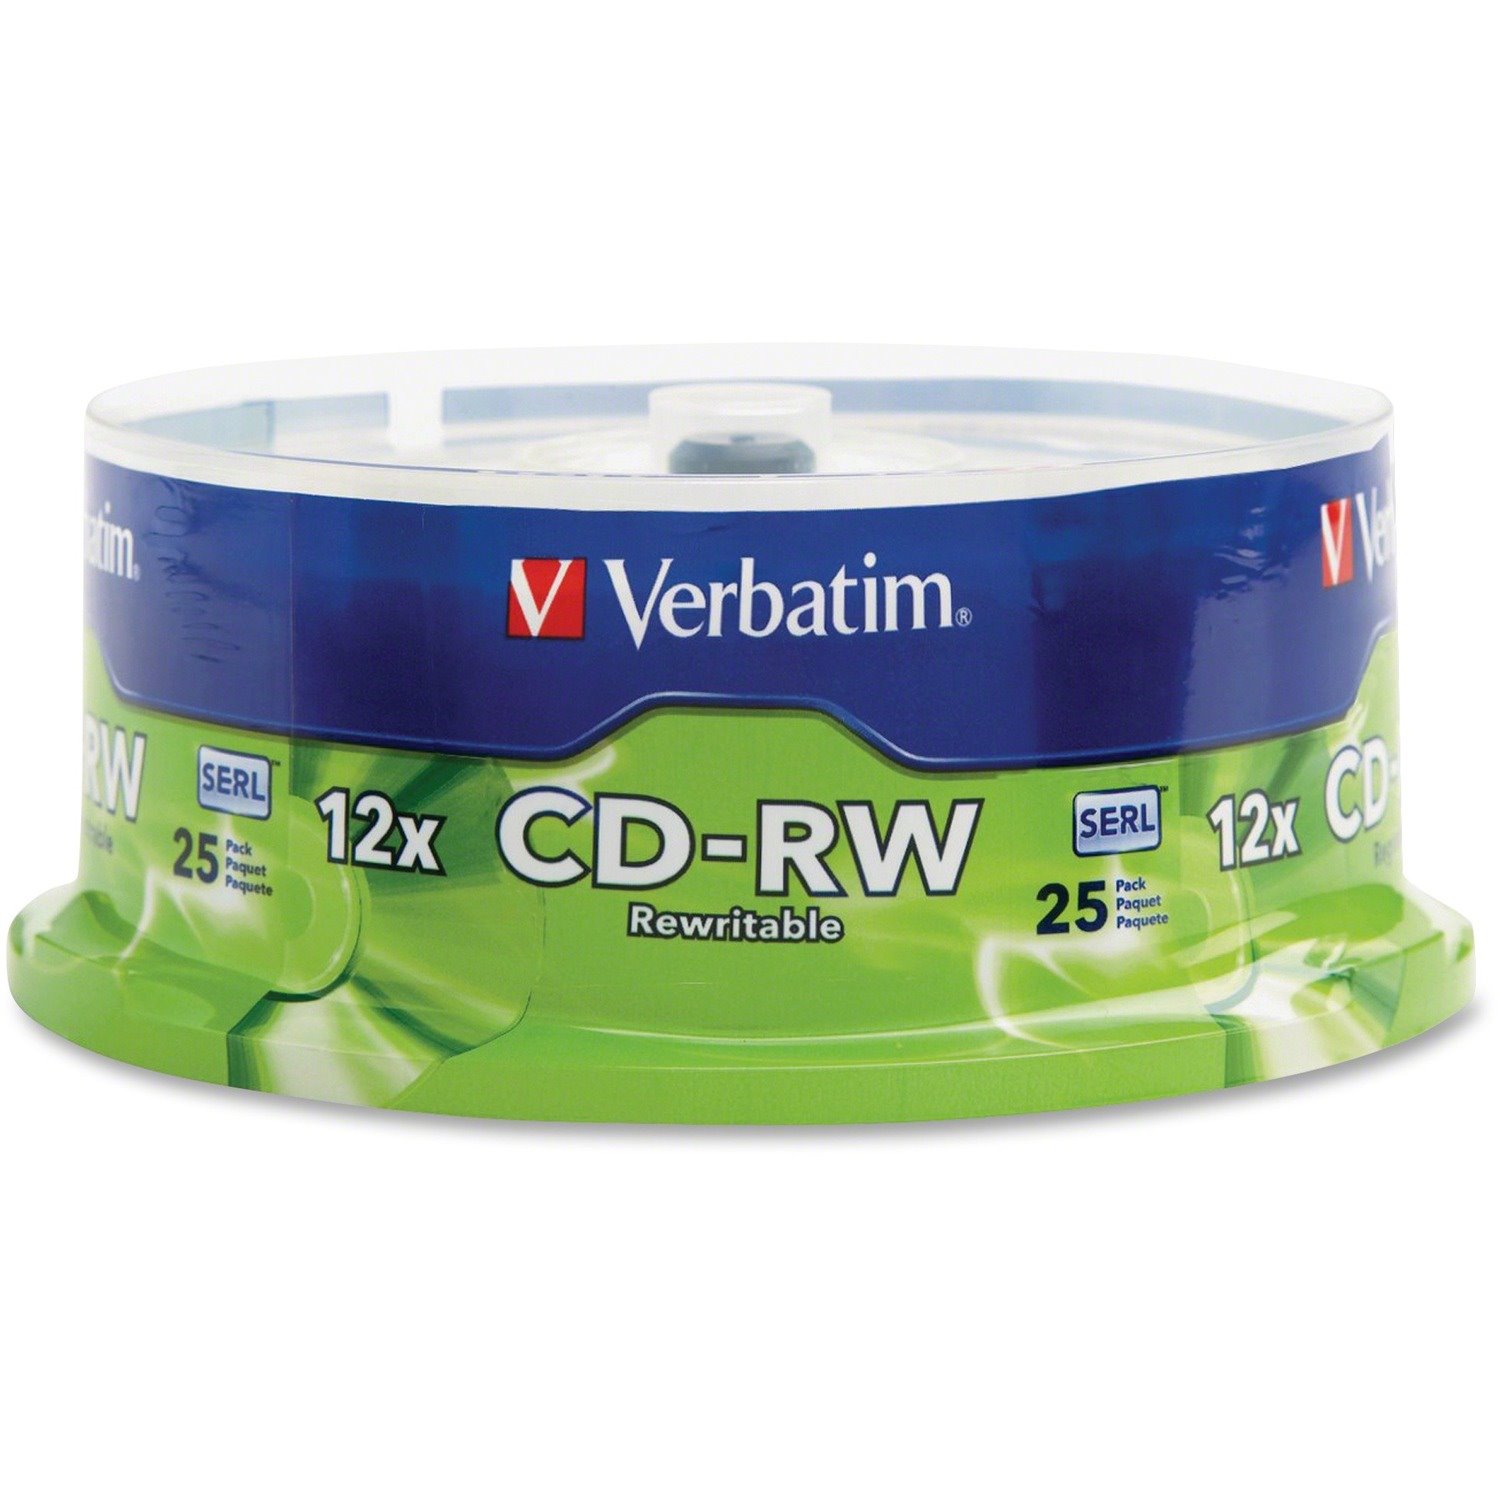 Verbatim 95155 CD Rewritable Media - CD-RW - 12x - 700 MB - 25 Pack Spindle